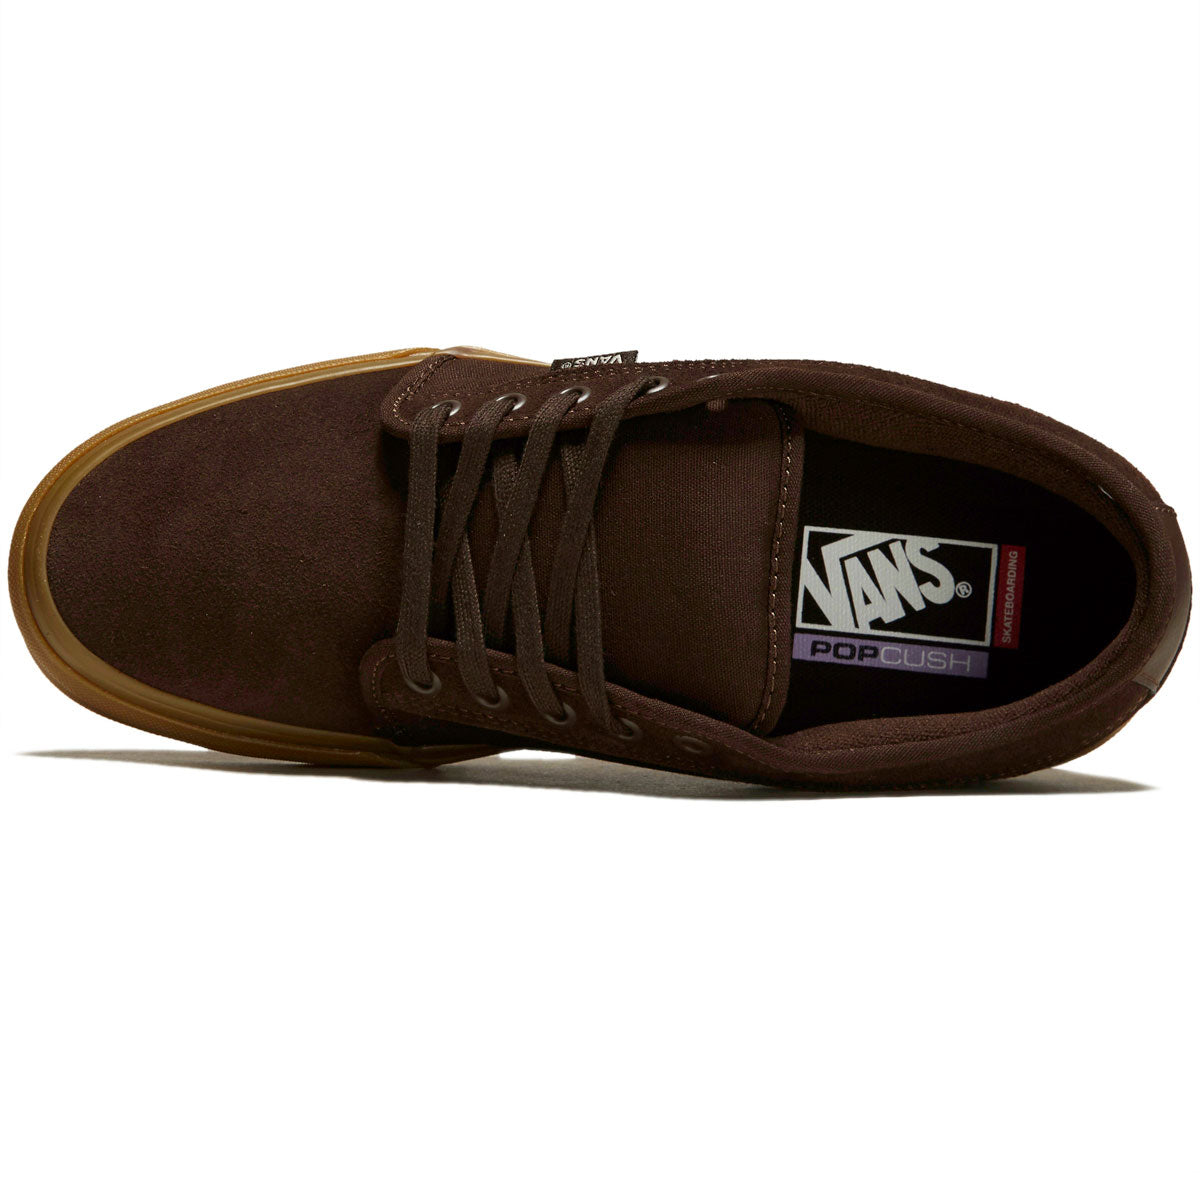 Vans Skate Chukka Low Shoes - Dark Brown/Gum image 3